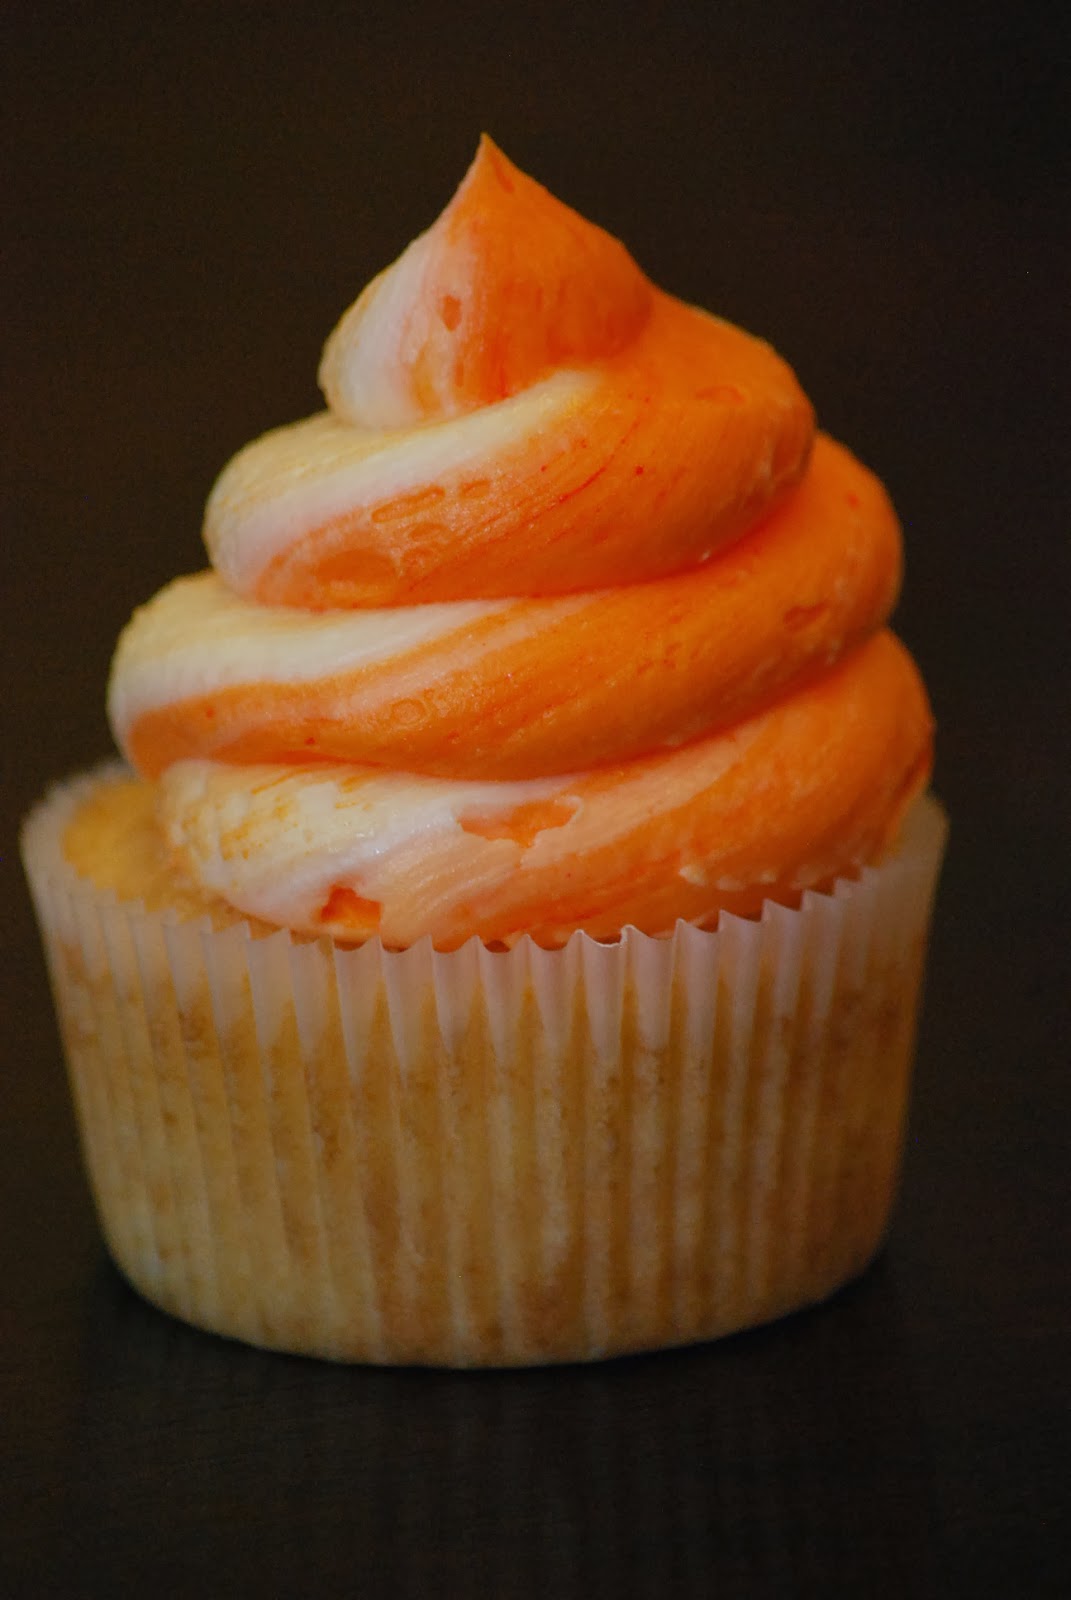 My story in recipes: Orange Crush Cupcakes